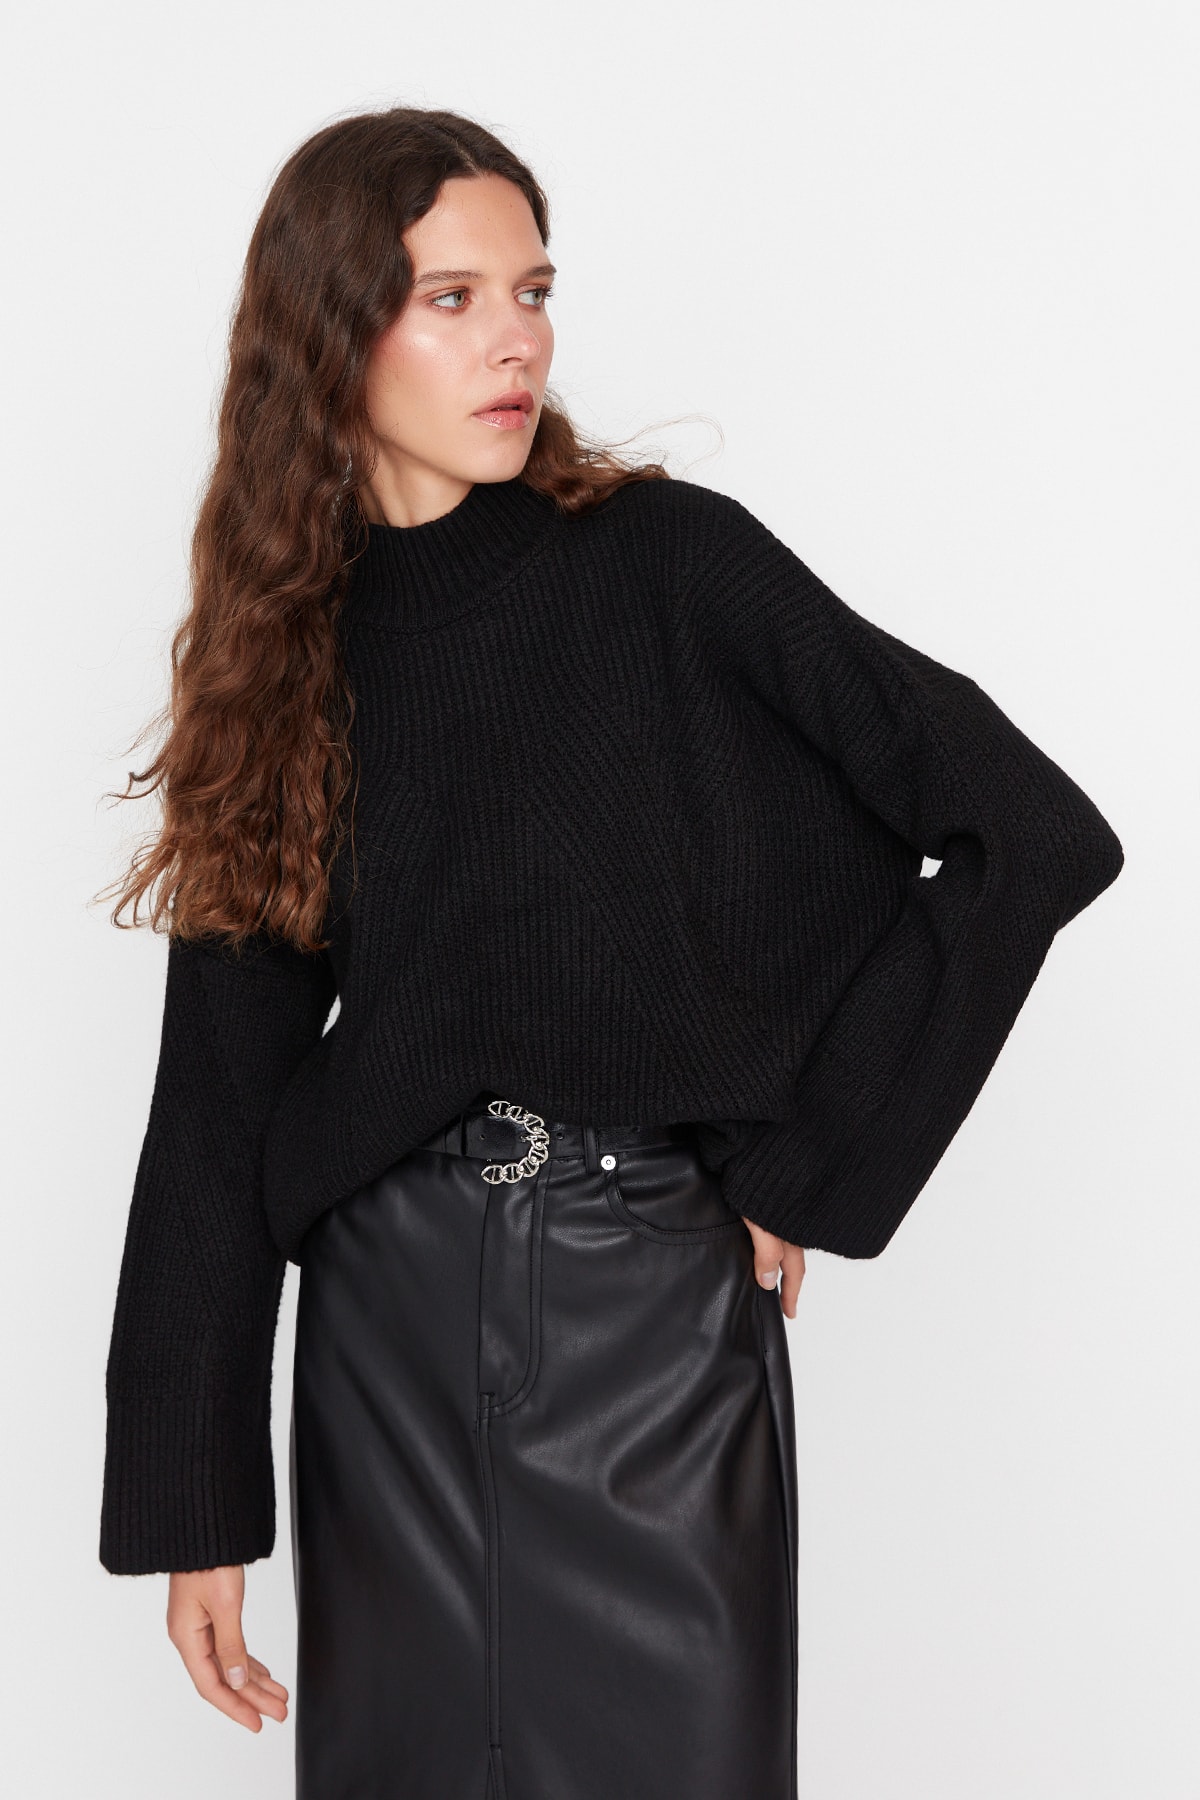 Trendyol Black Soft Textured Basic Knitwear Sweater